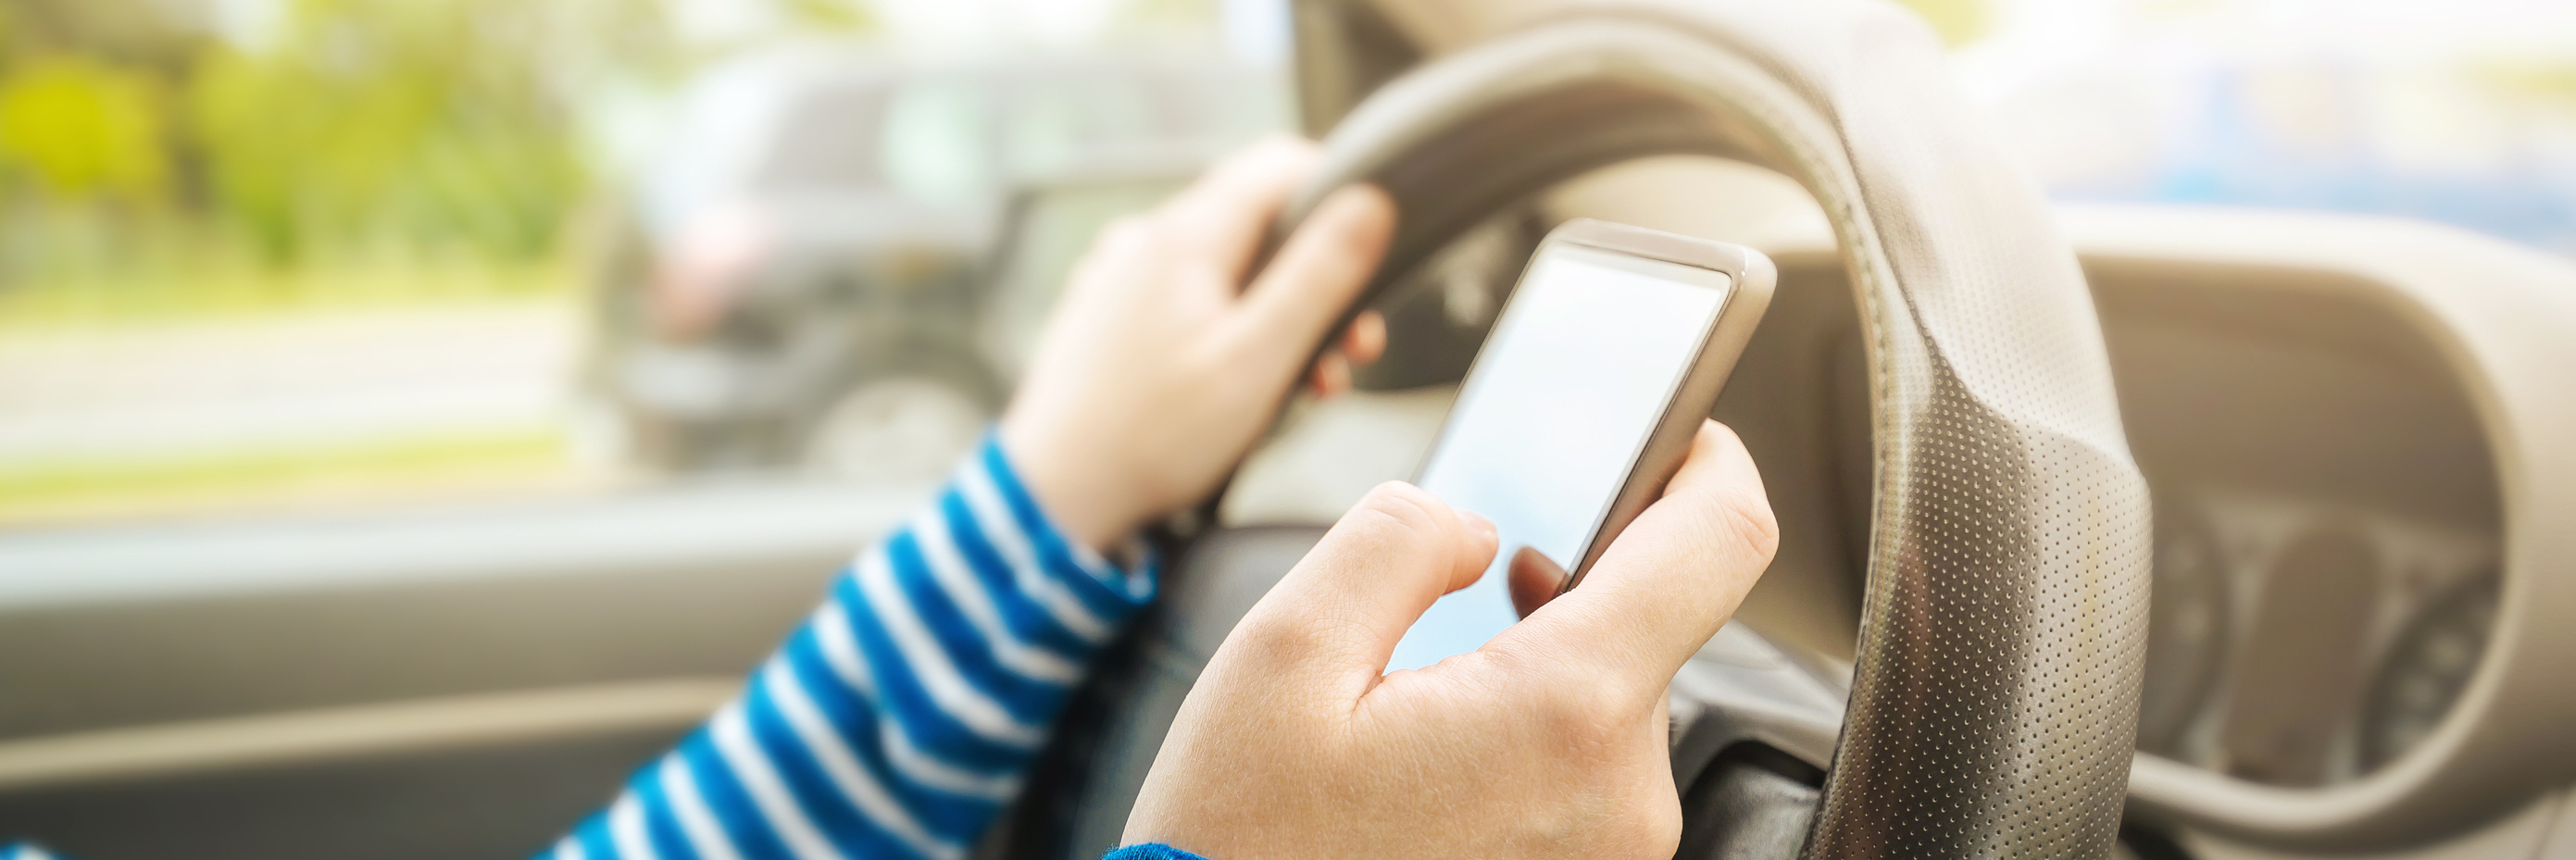 omada digital steer safe driving app